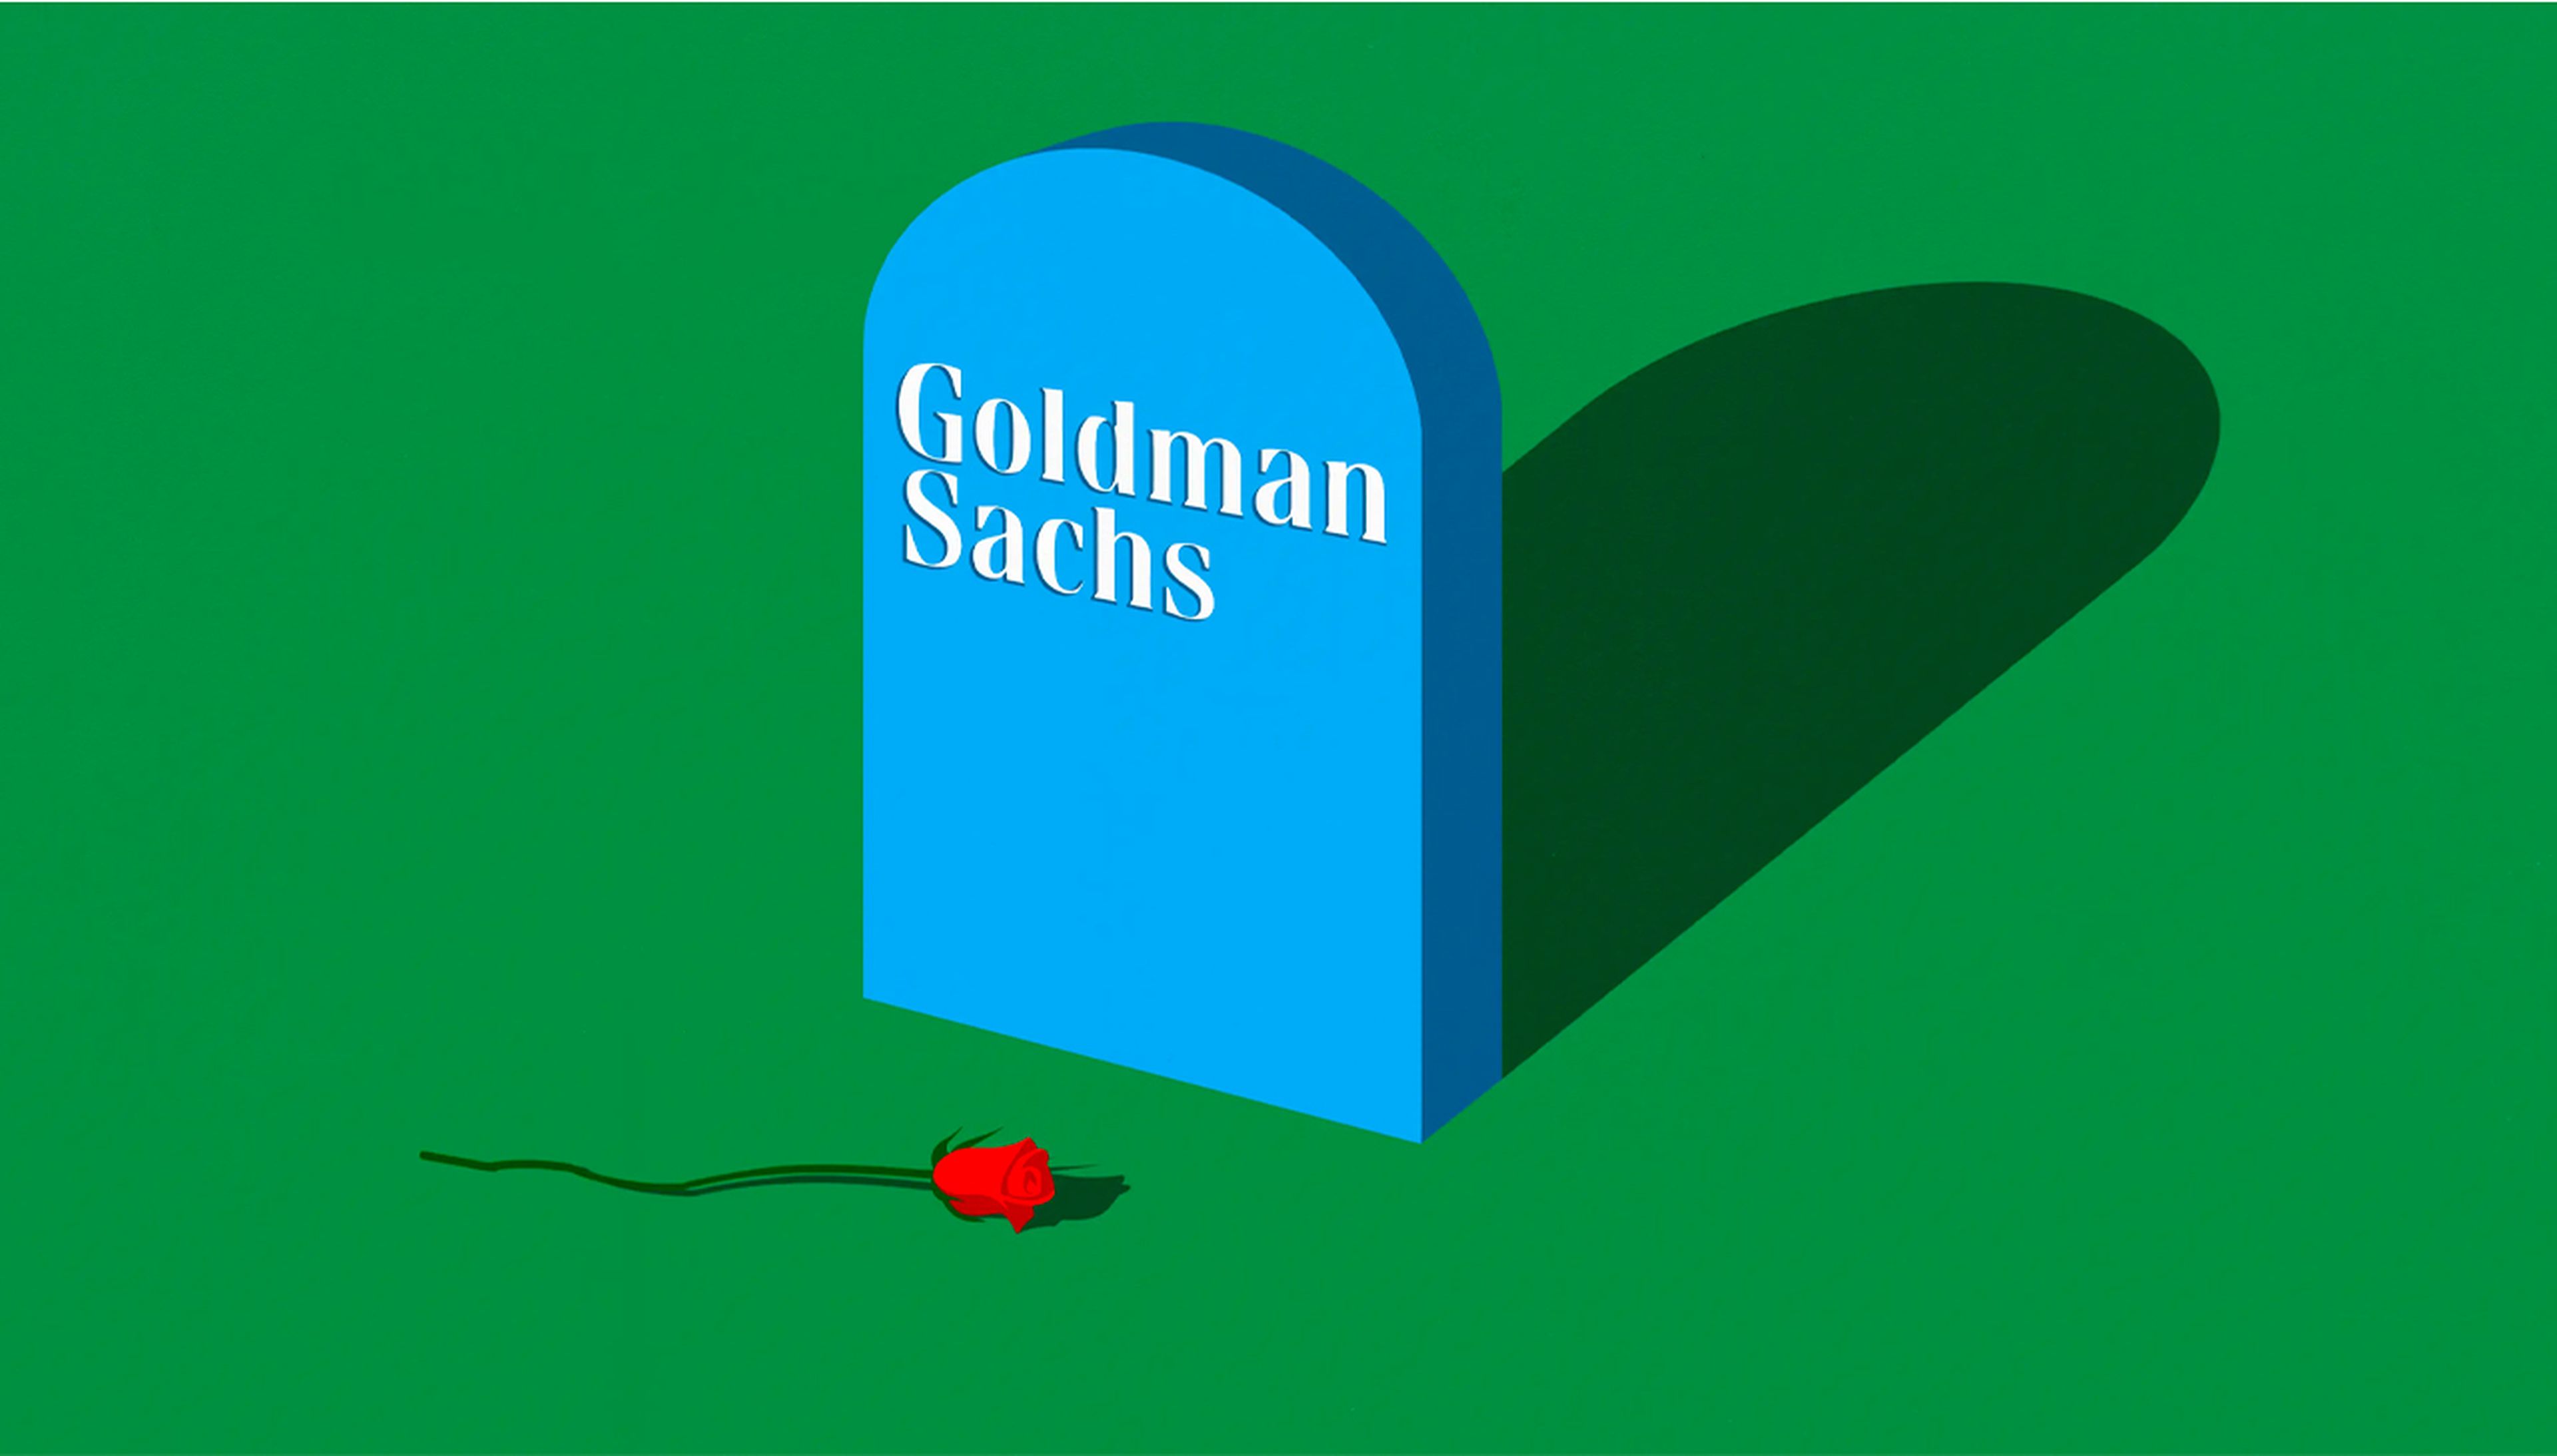 RIP Goldman Sachs.